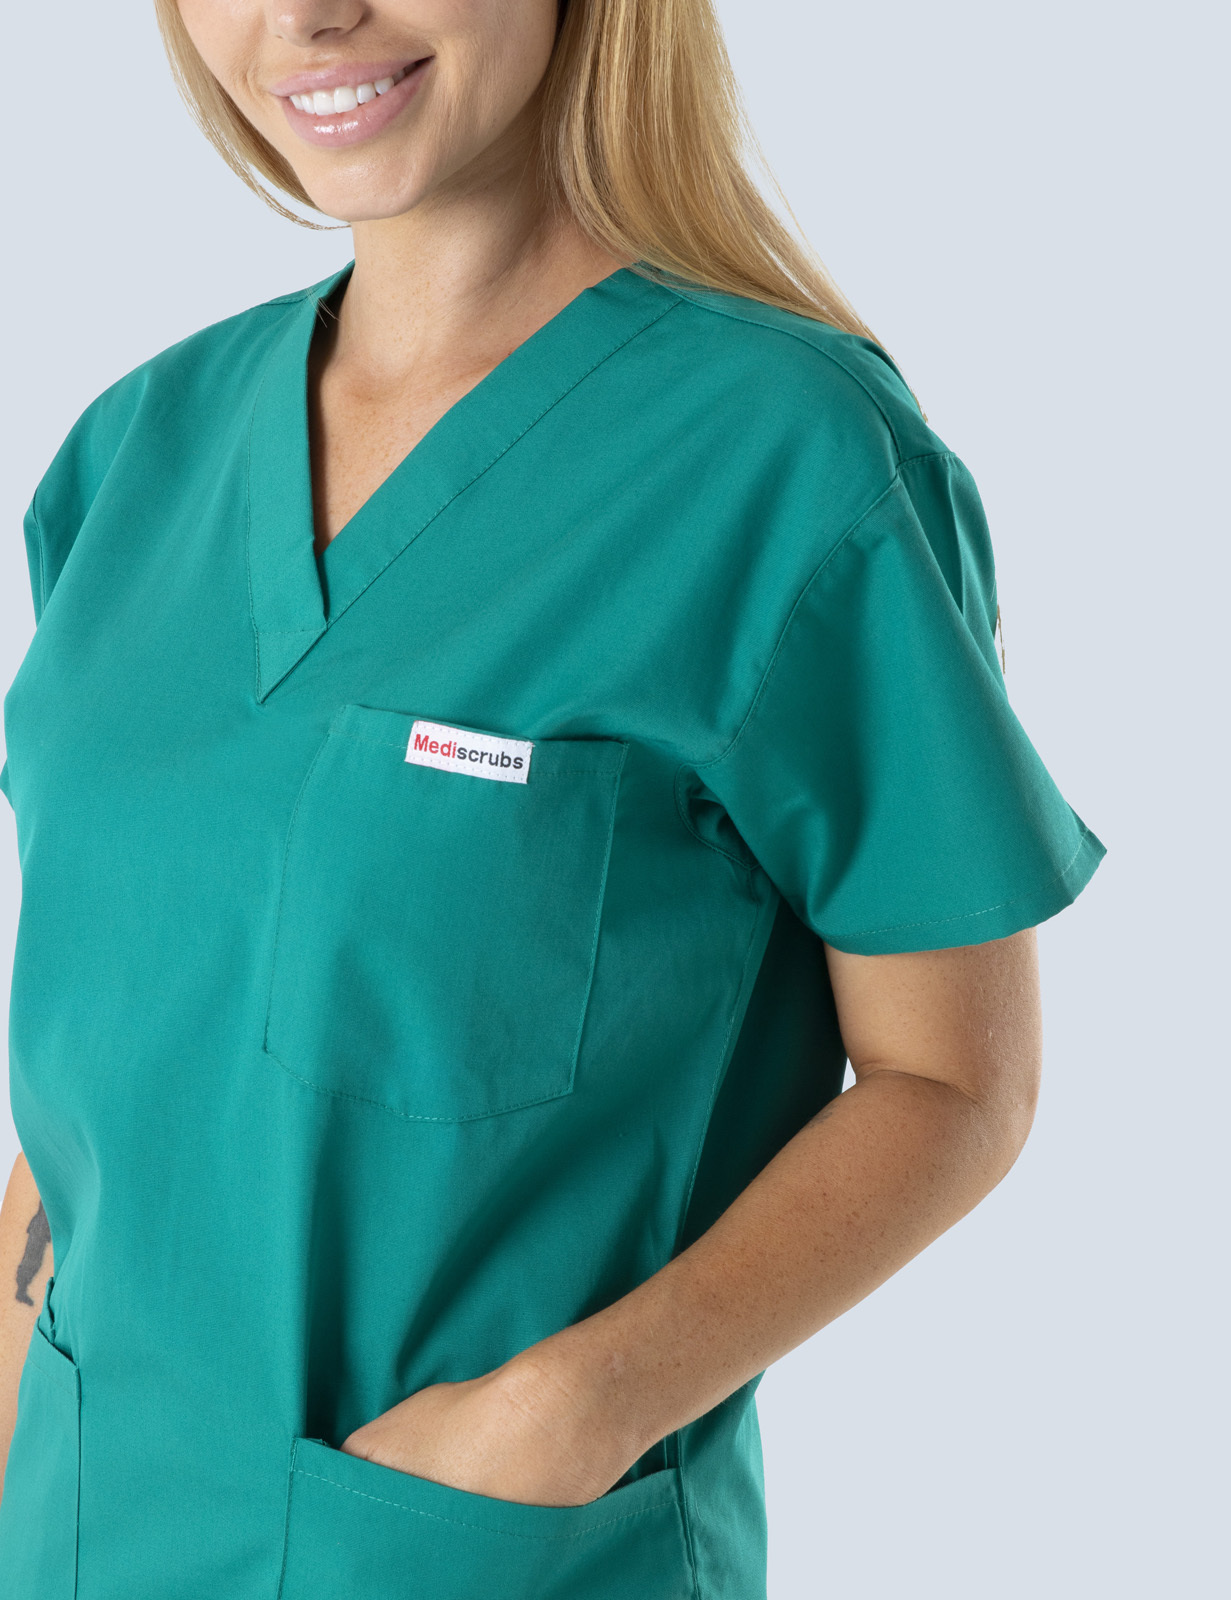 Queensland Children's Hospital Emergency Department Registered  Nurse  Uniform Top Bundle  (4 Pocket Top in Hunter incl Logos)